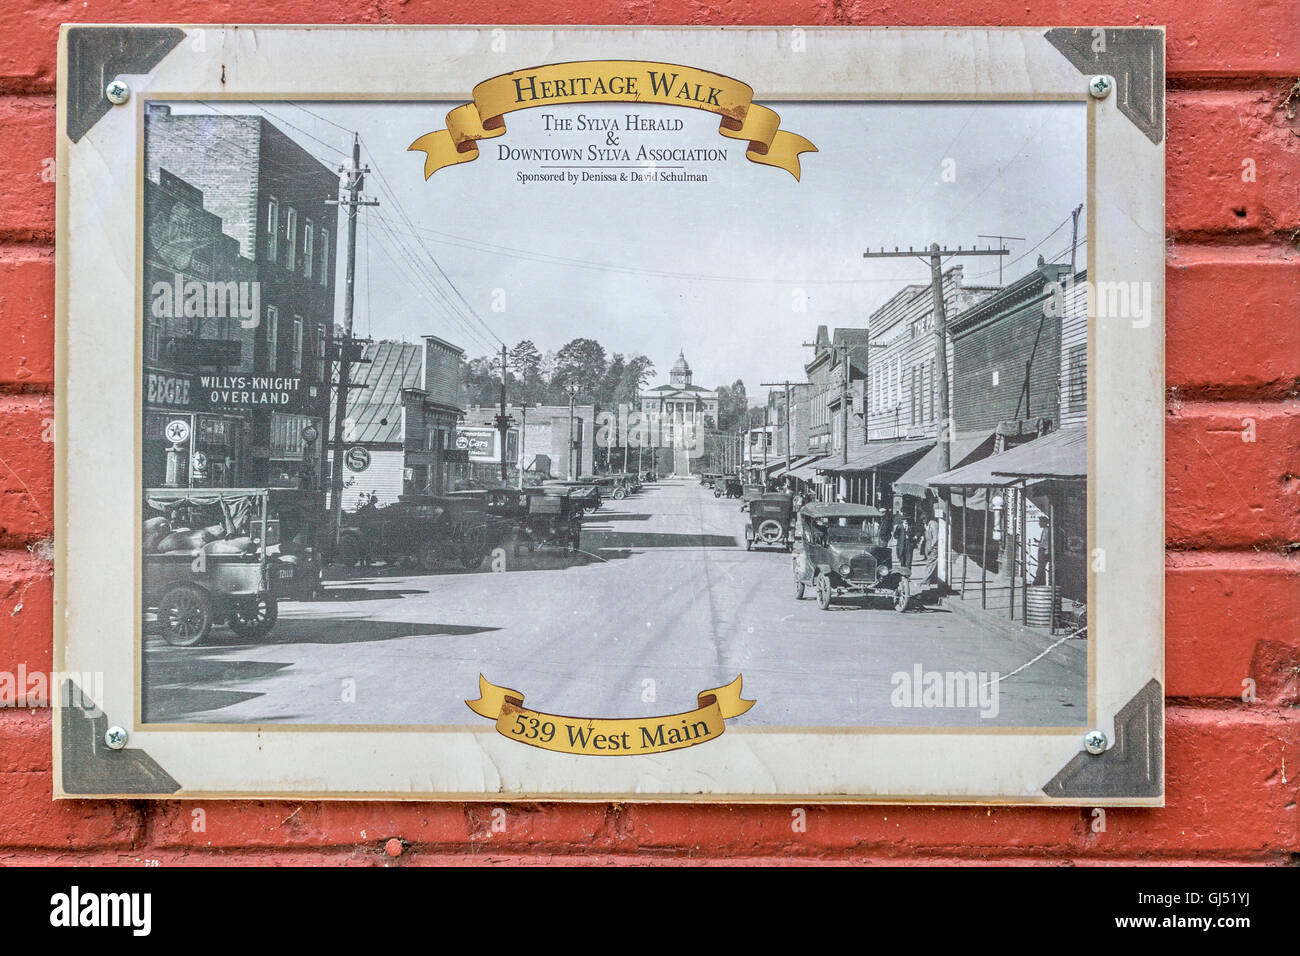 Heritage Walk historical photo on brick wall at 539 West Main Street in downtown Sylva, North Carolina Stock Photo